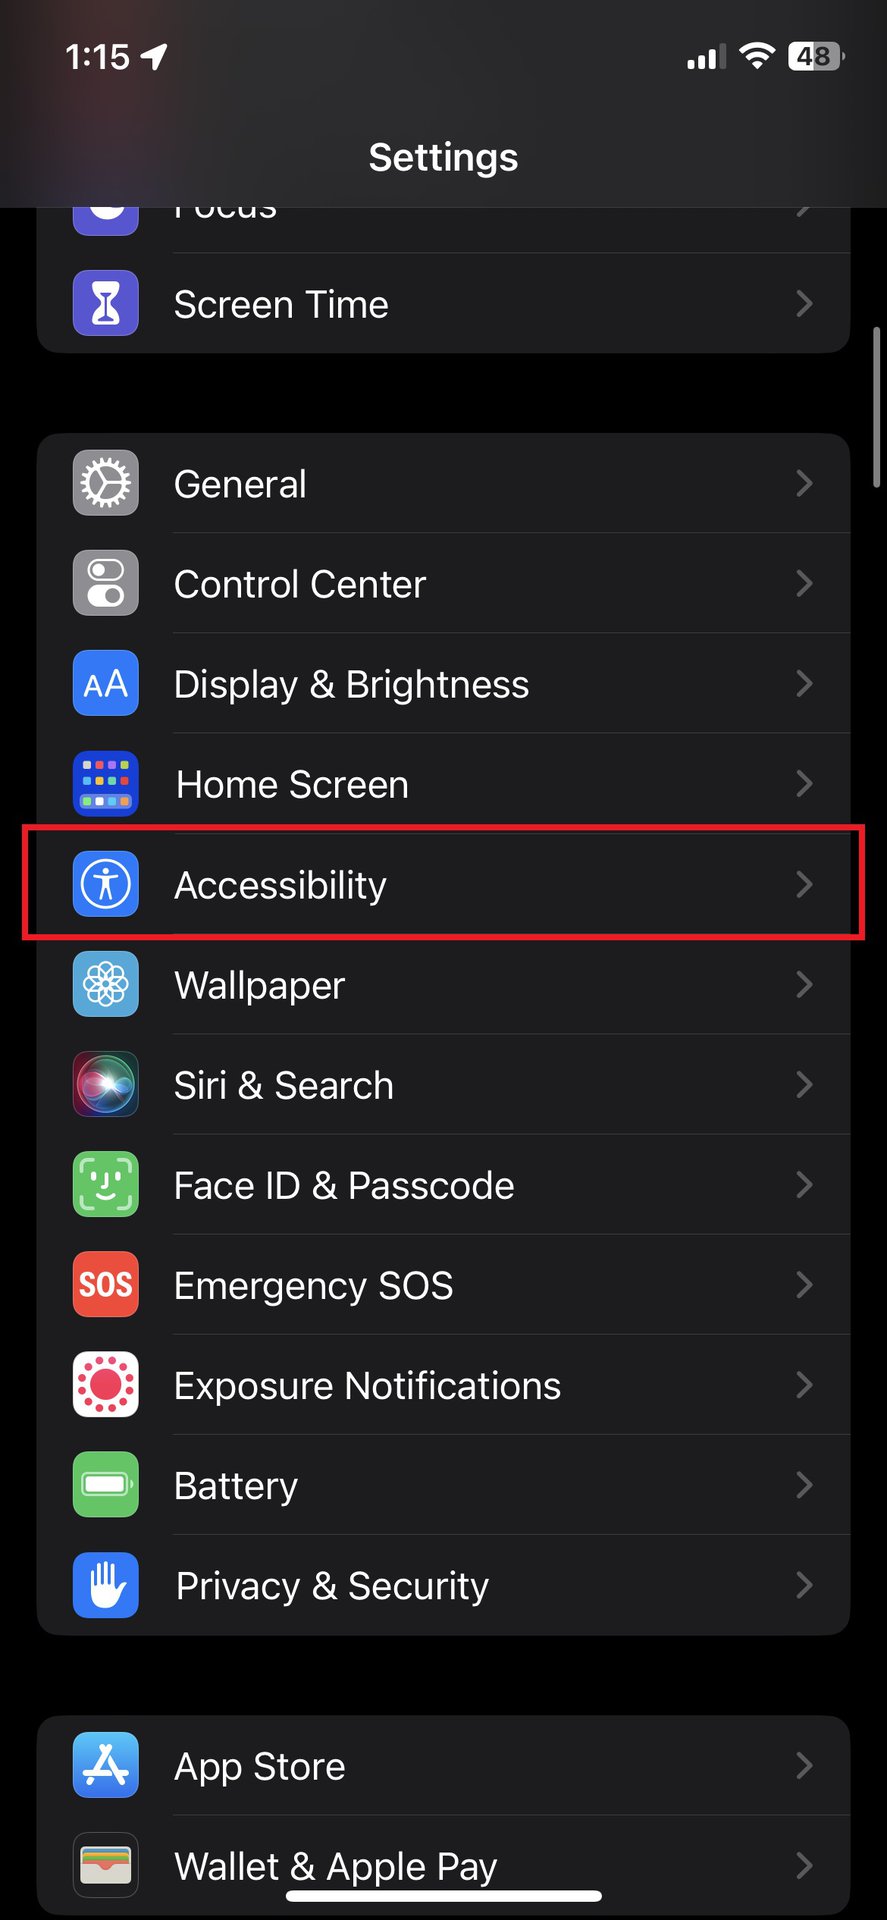 iPhone accessability settings